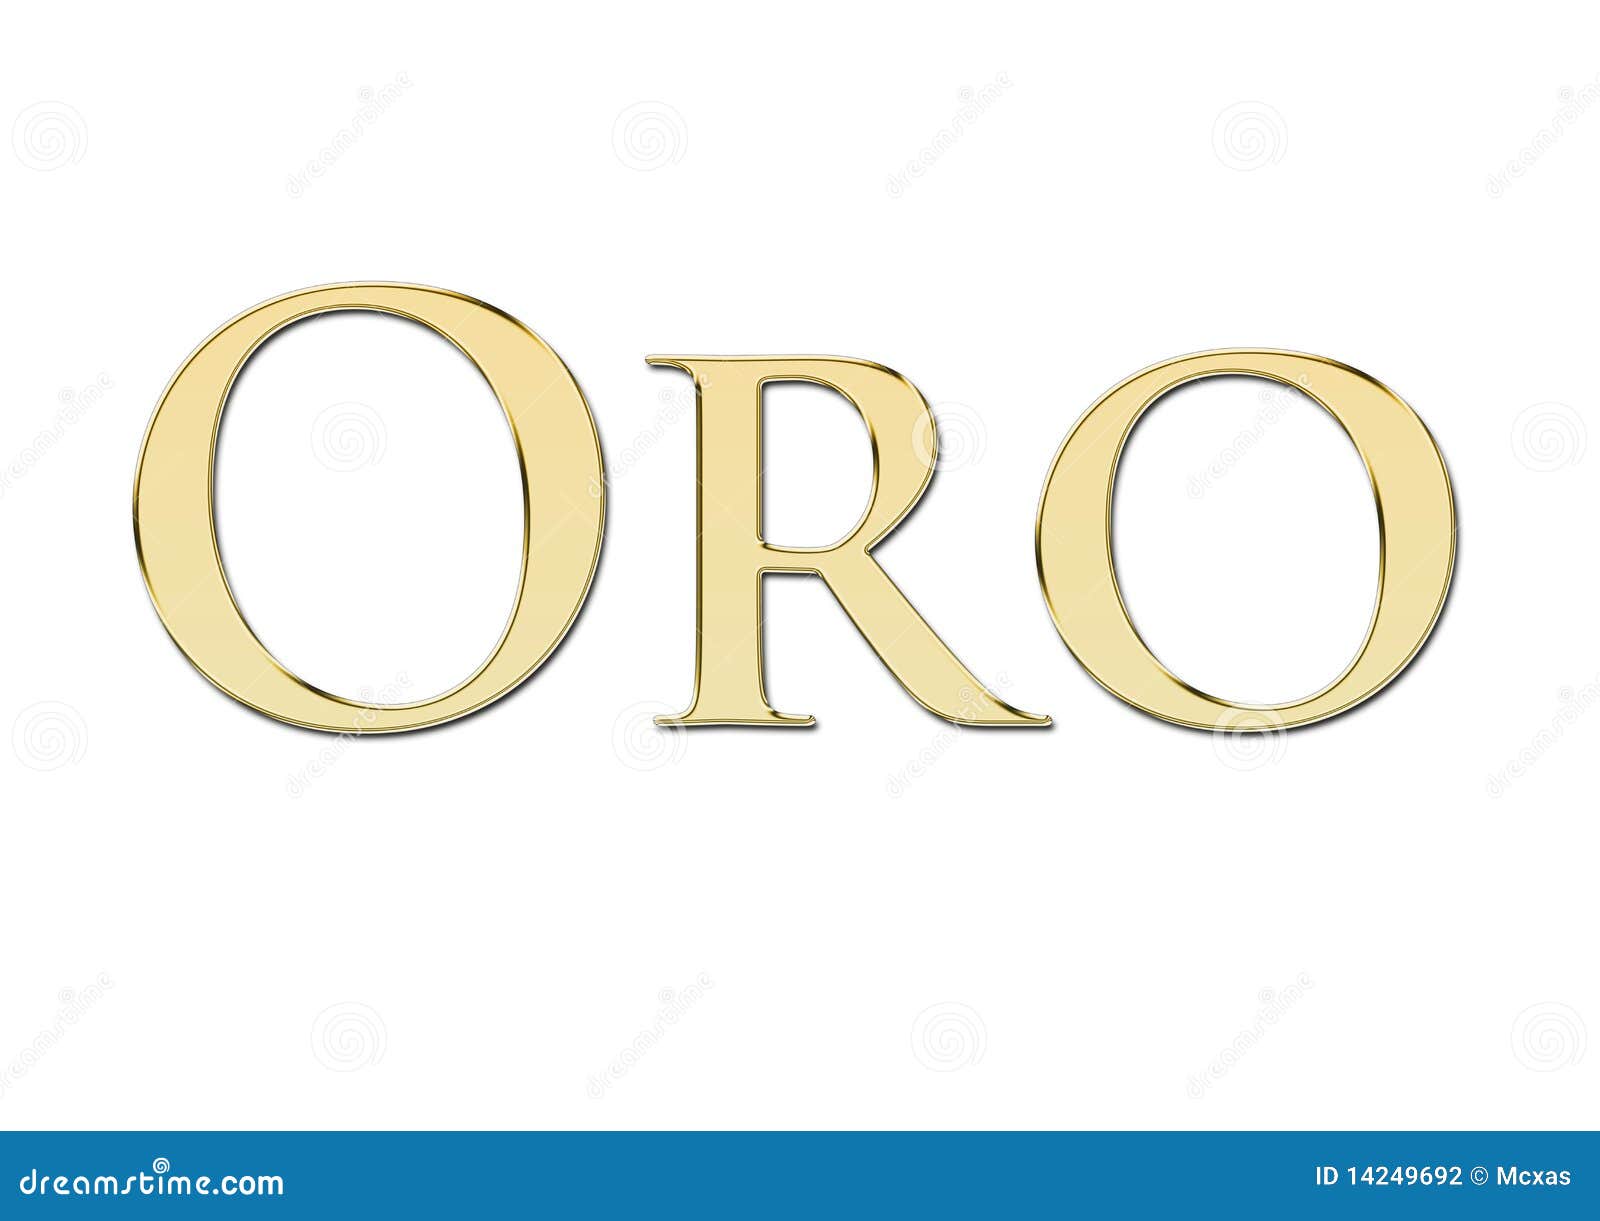 gold (oro in spanish) written in golden letters